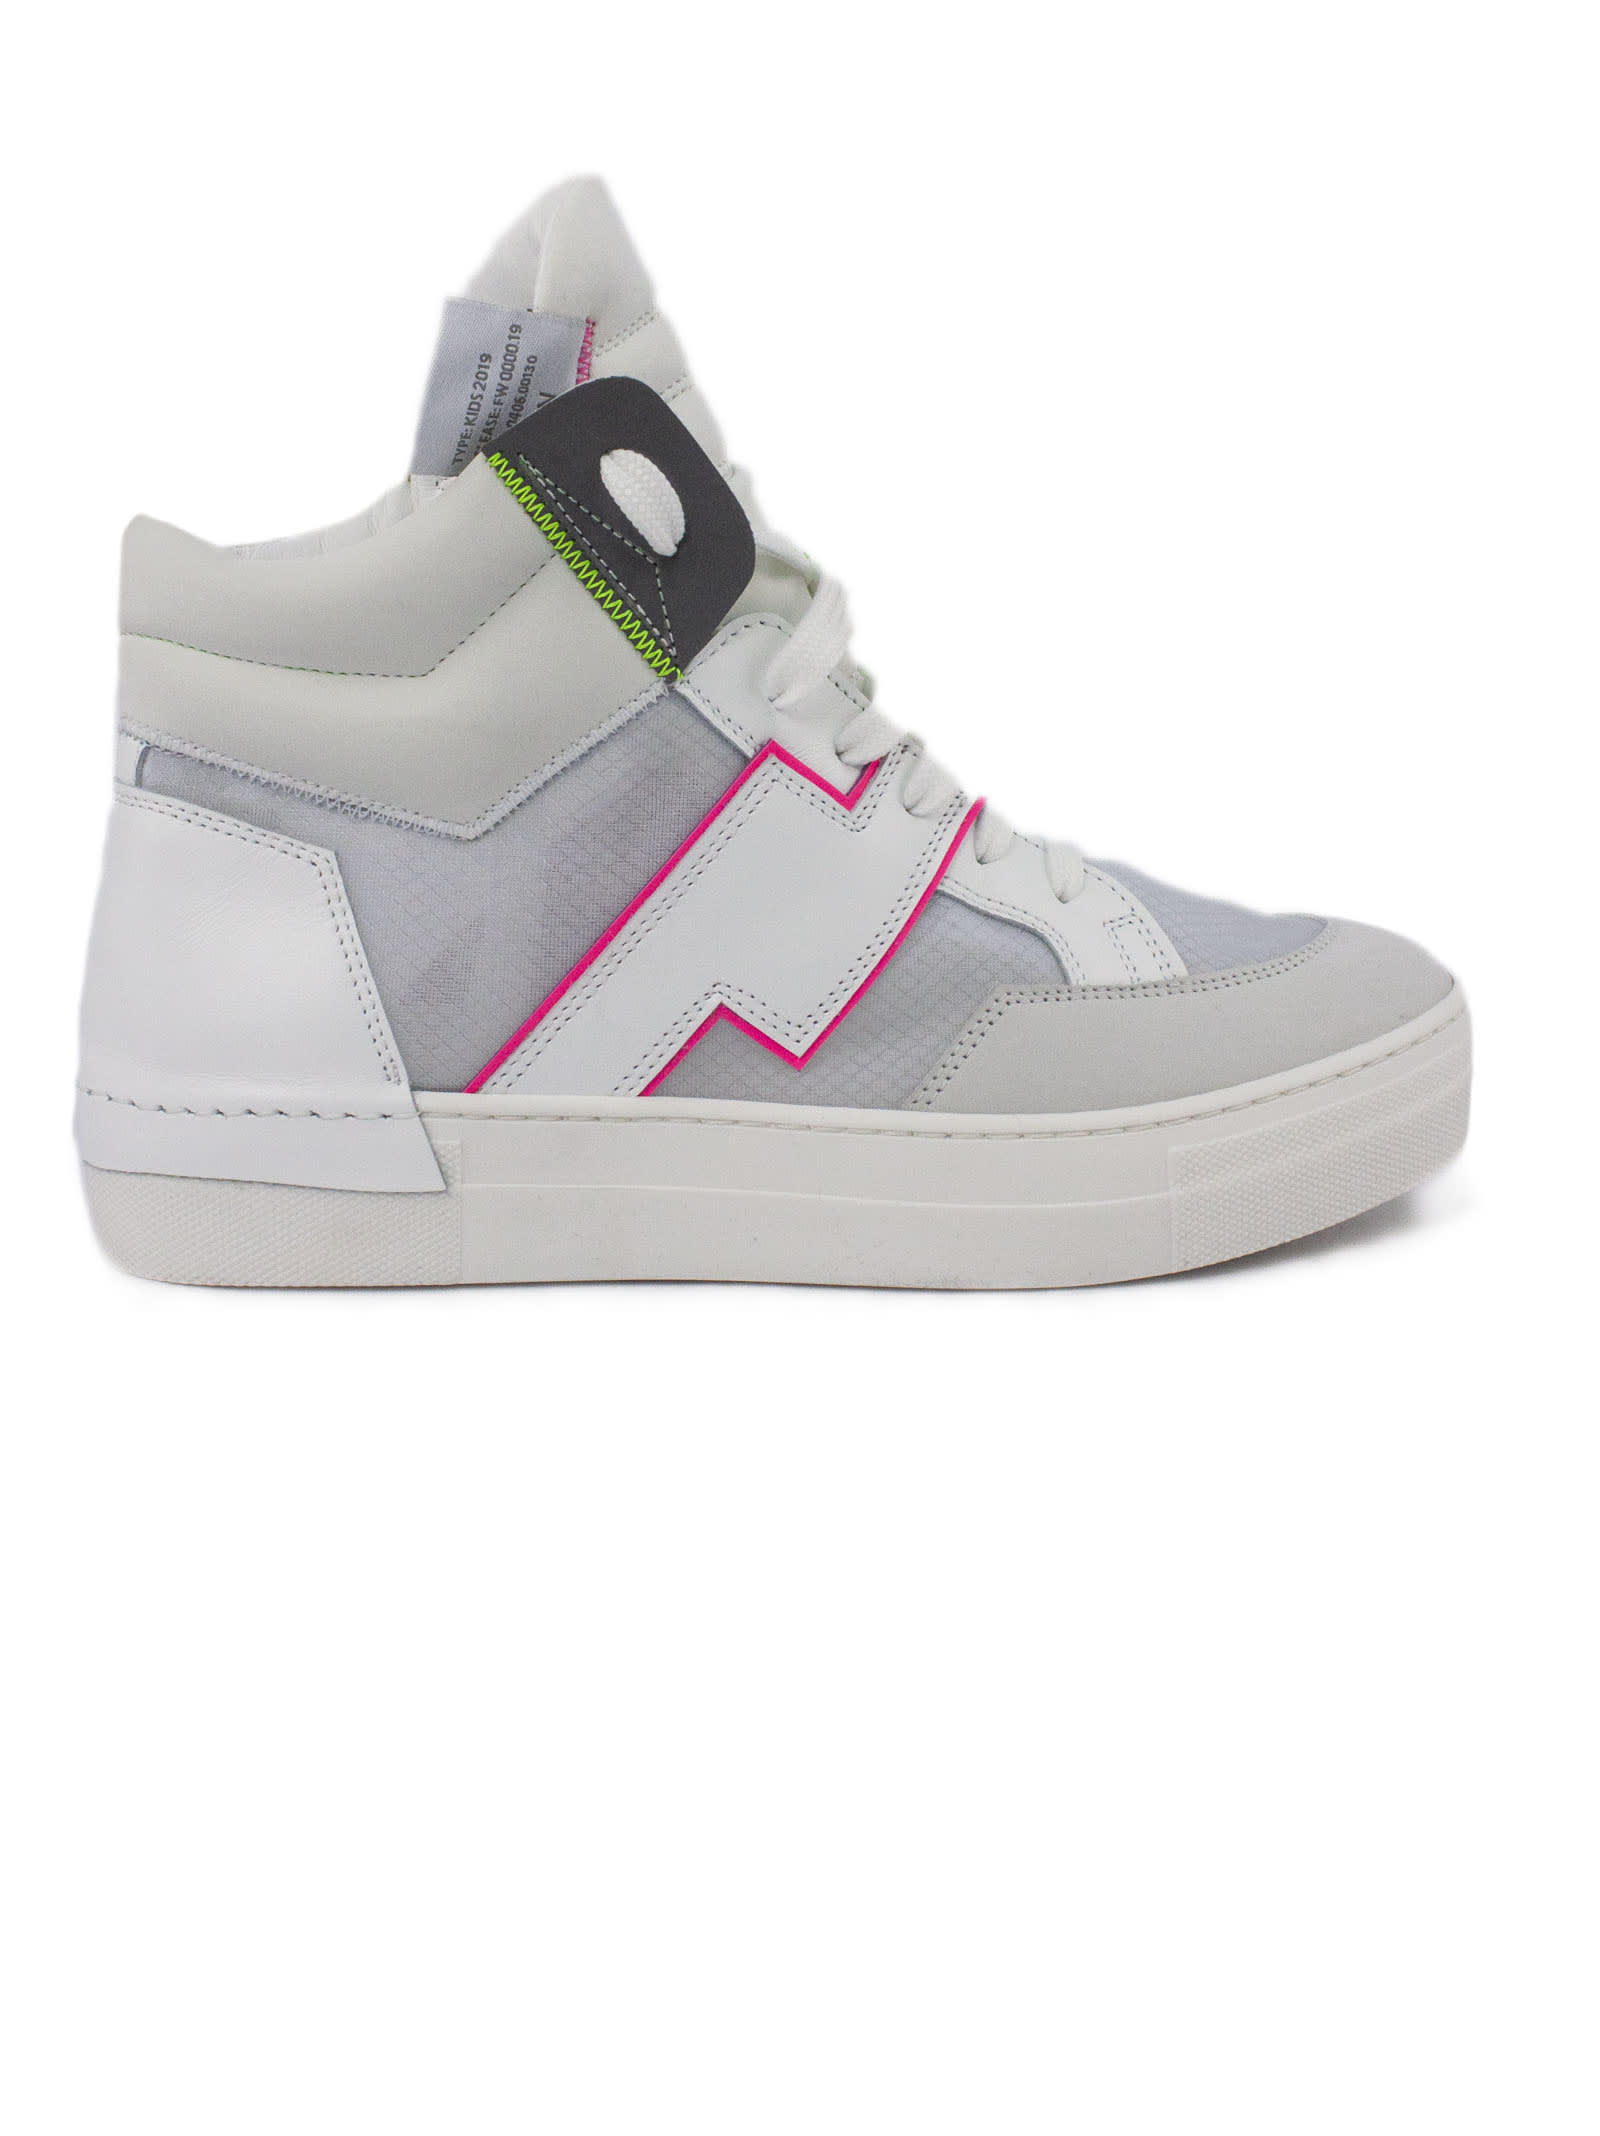 Cinzia Araia White Leather High Top Sneakers